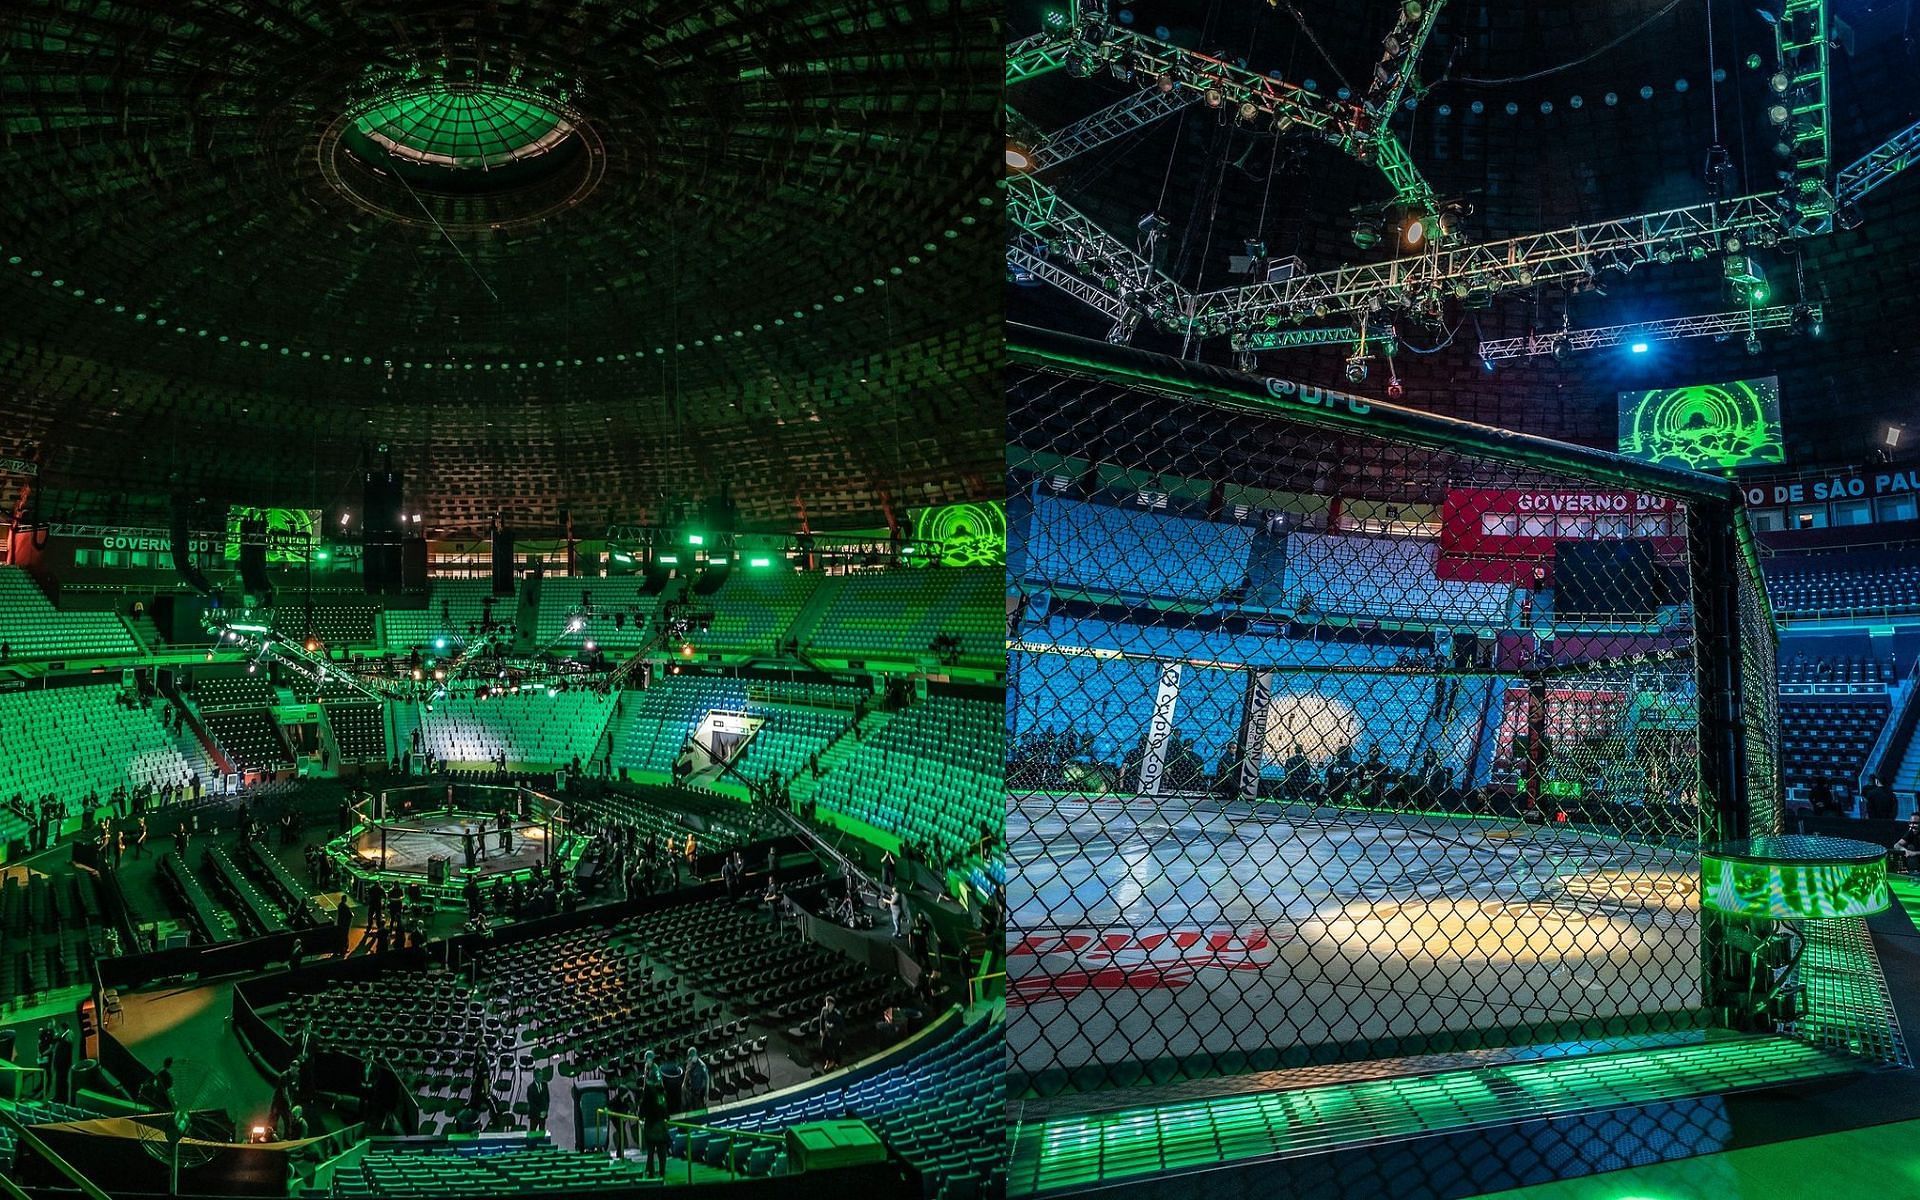 UFC Sao Paulo [Images via: @ufc_brasil on Instagram]